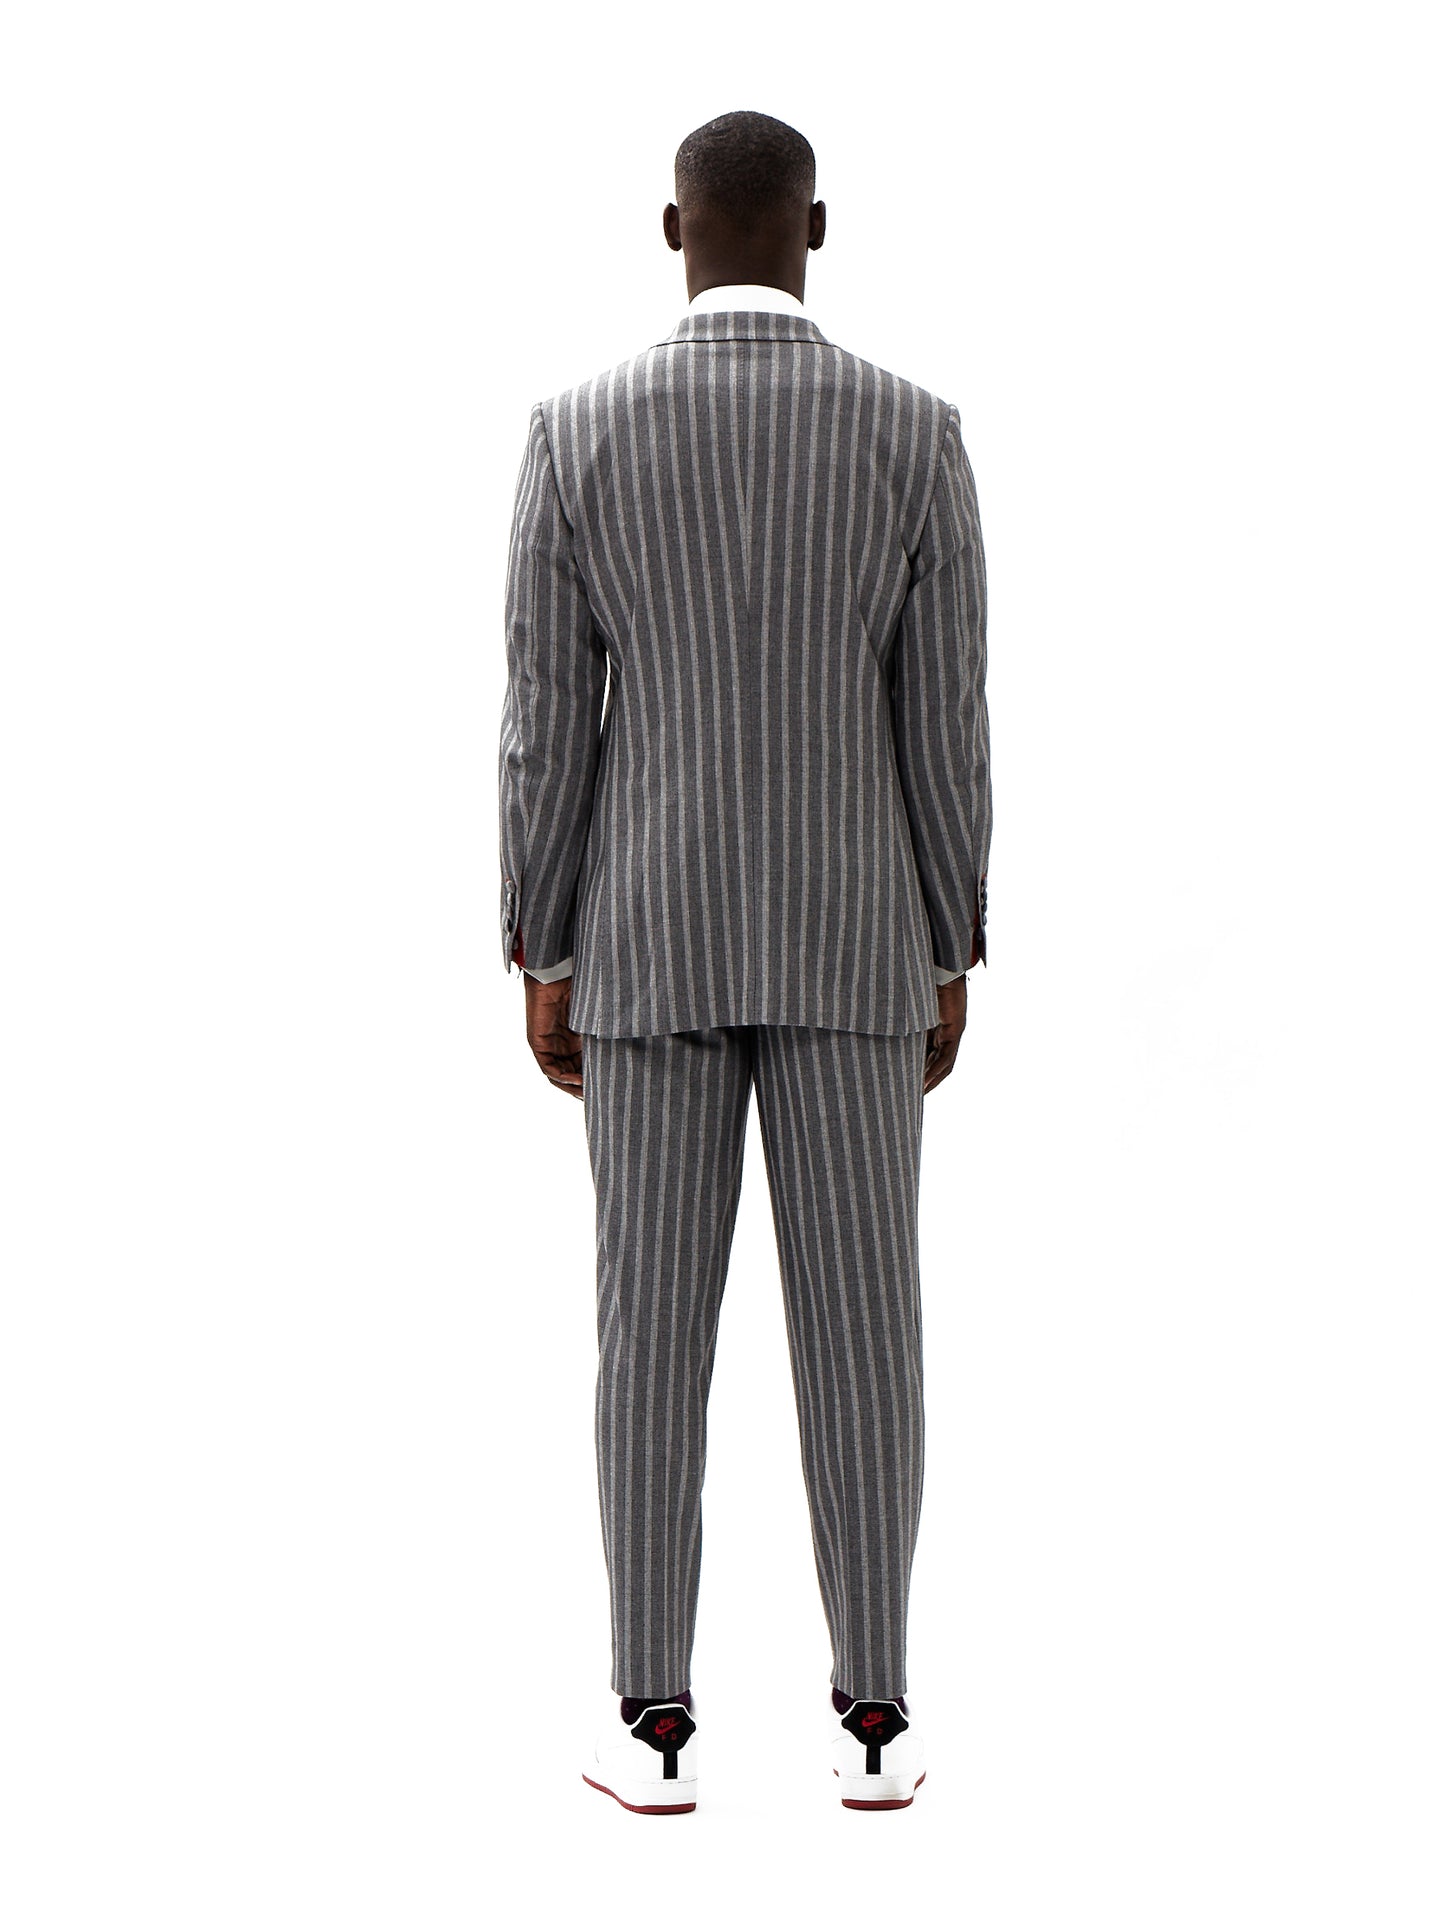 Thomas Gray Pin Stripe Suit